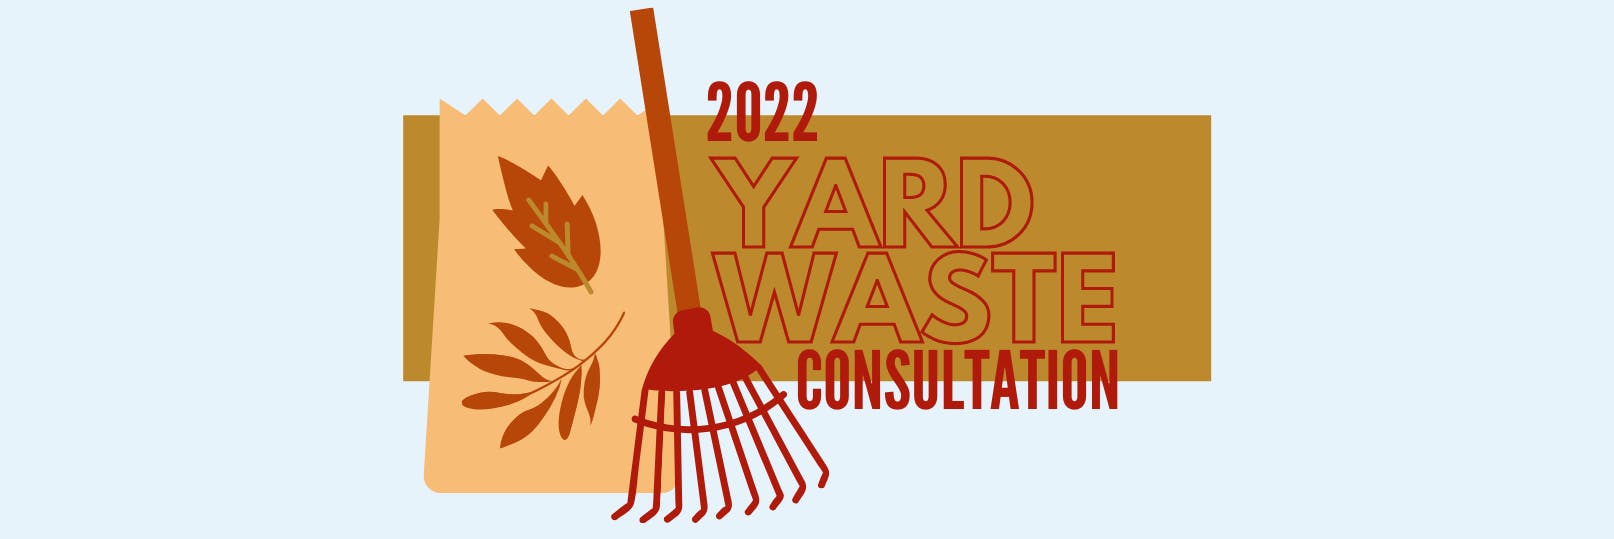 2022 Yard Waste Consultation